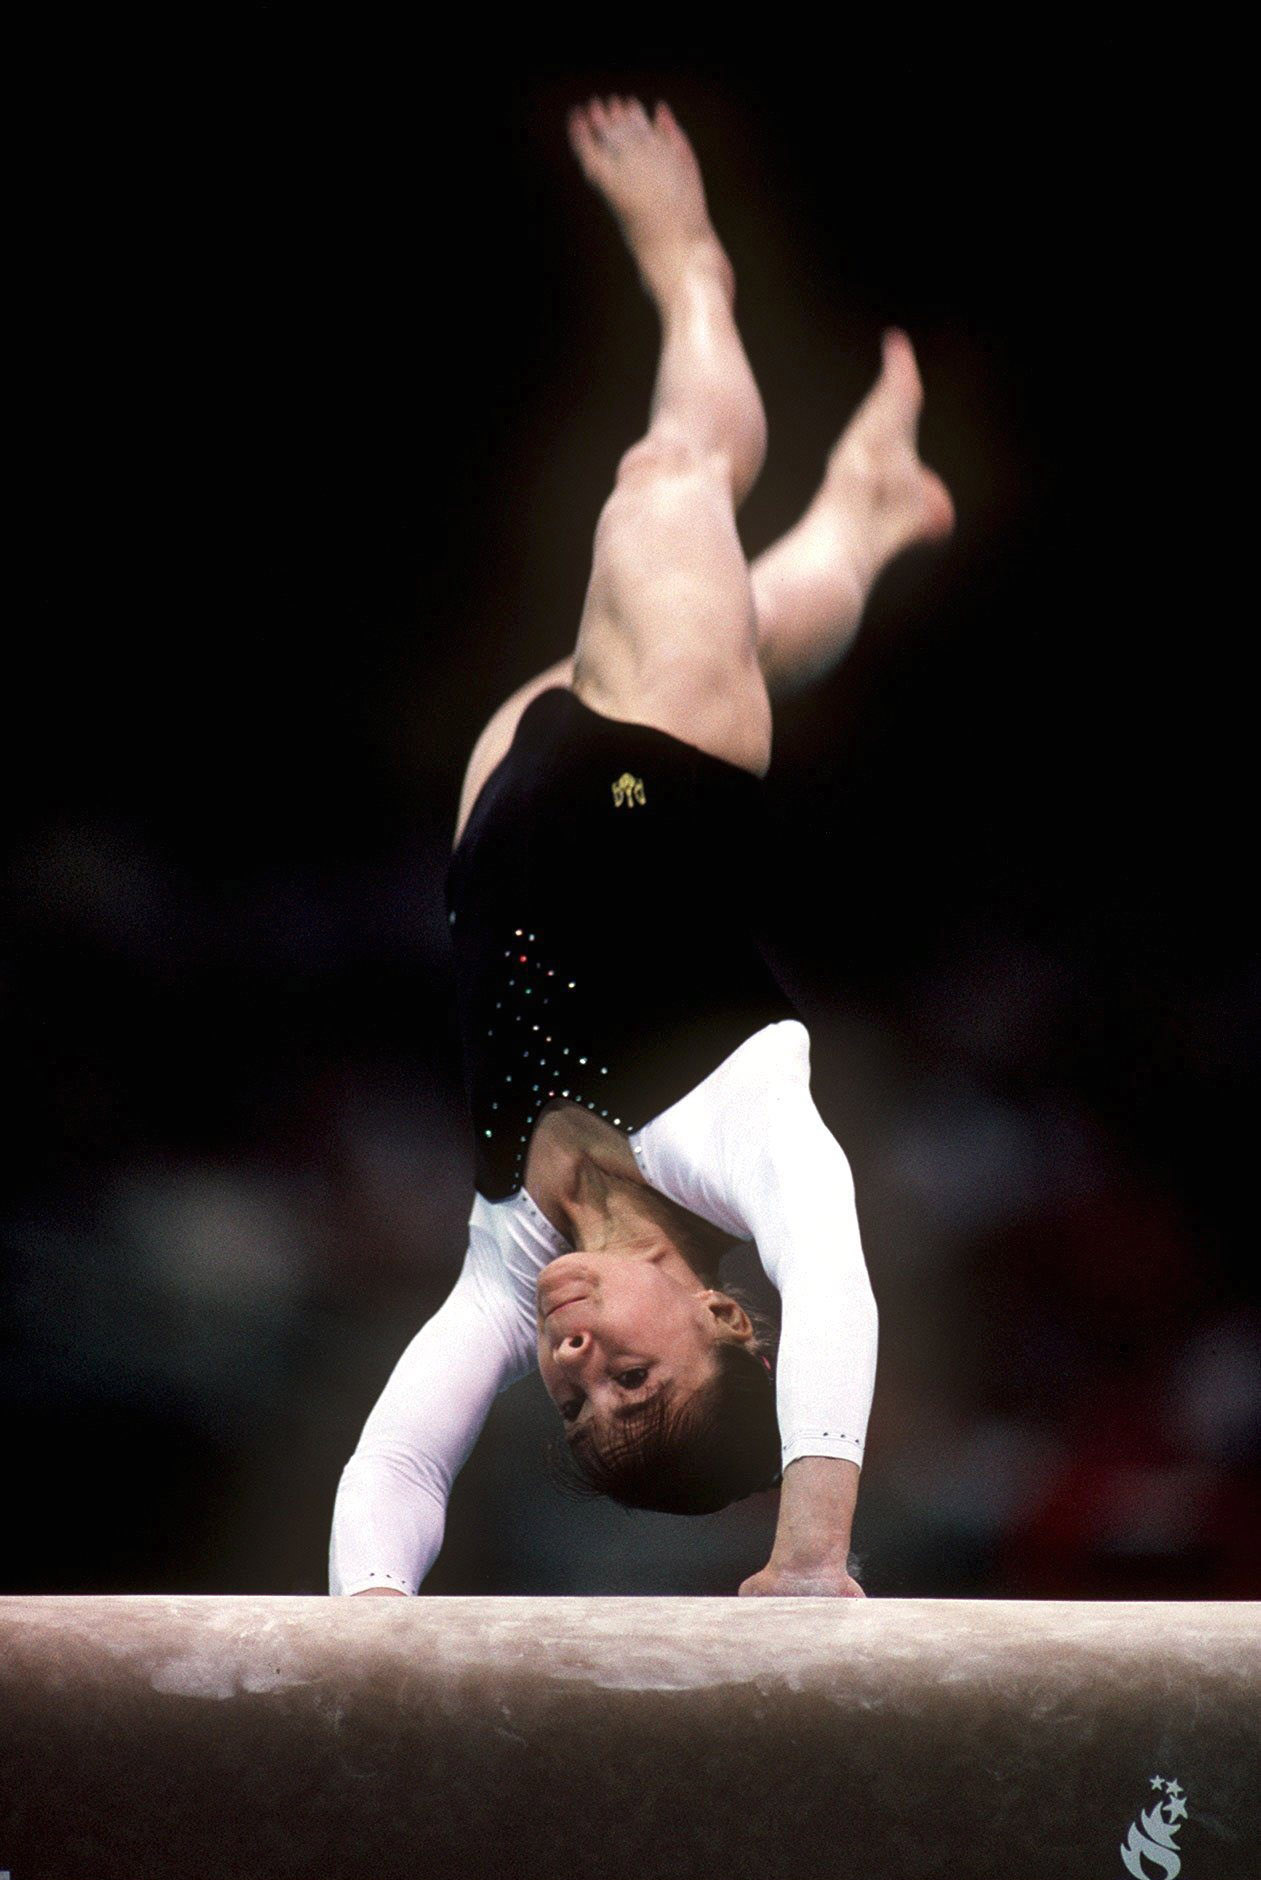 Лілія Подкопаєва олімпіада 1996 Атланта